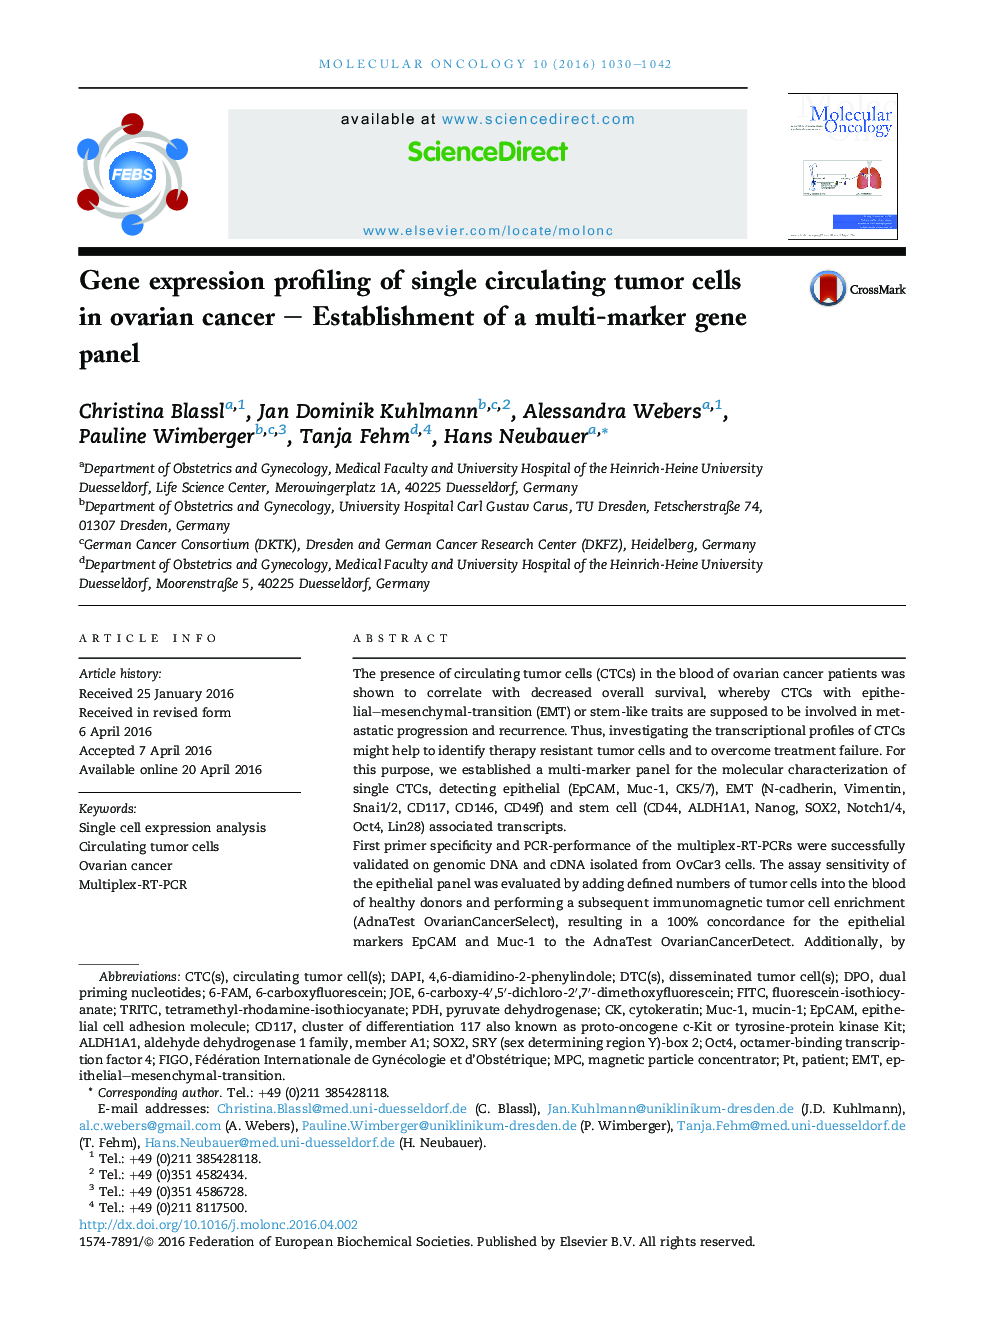 Gene expression profiling of single circulating tumor cells inÂ ovarian cancer - Establishment of a multi-marker gene panel